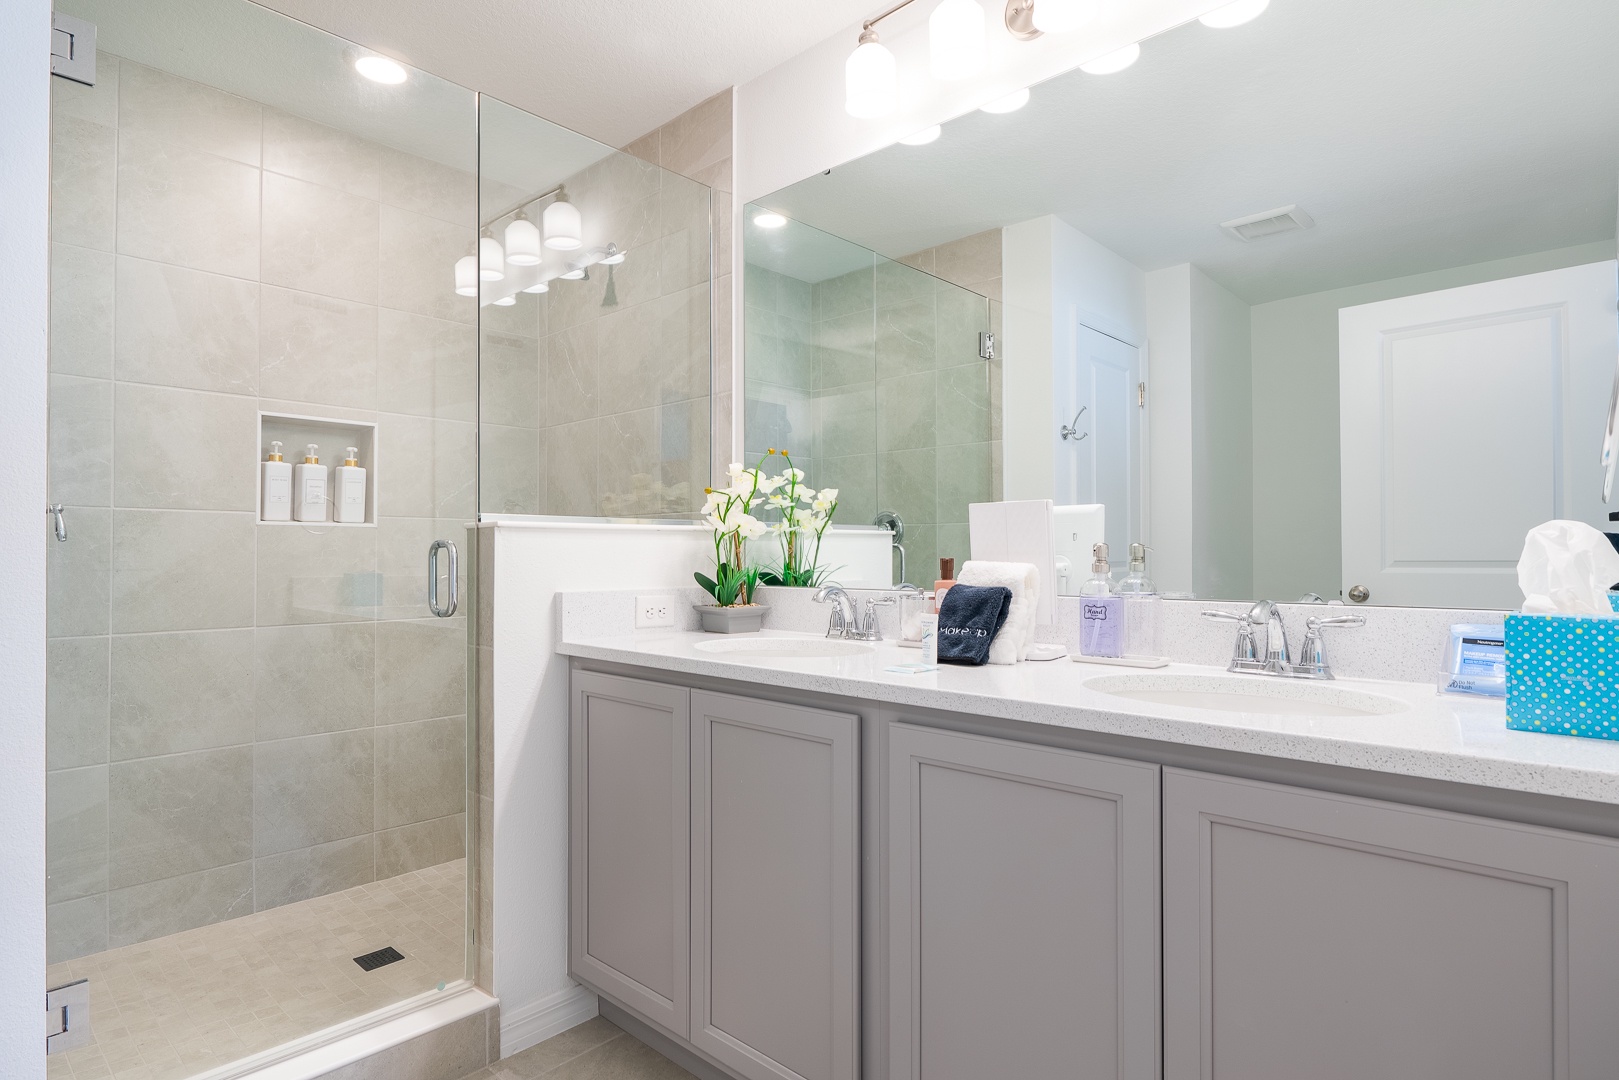 The king en suite bathroom offers an oversized double vanity & glass shower